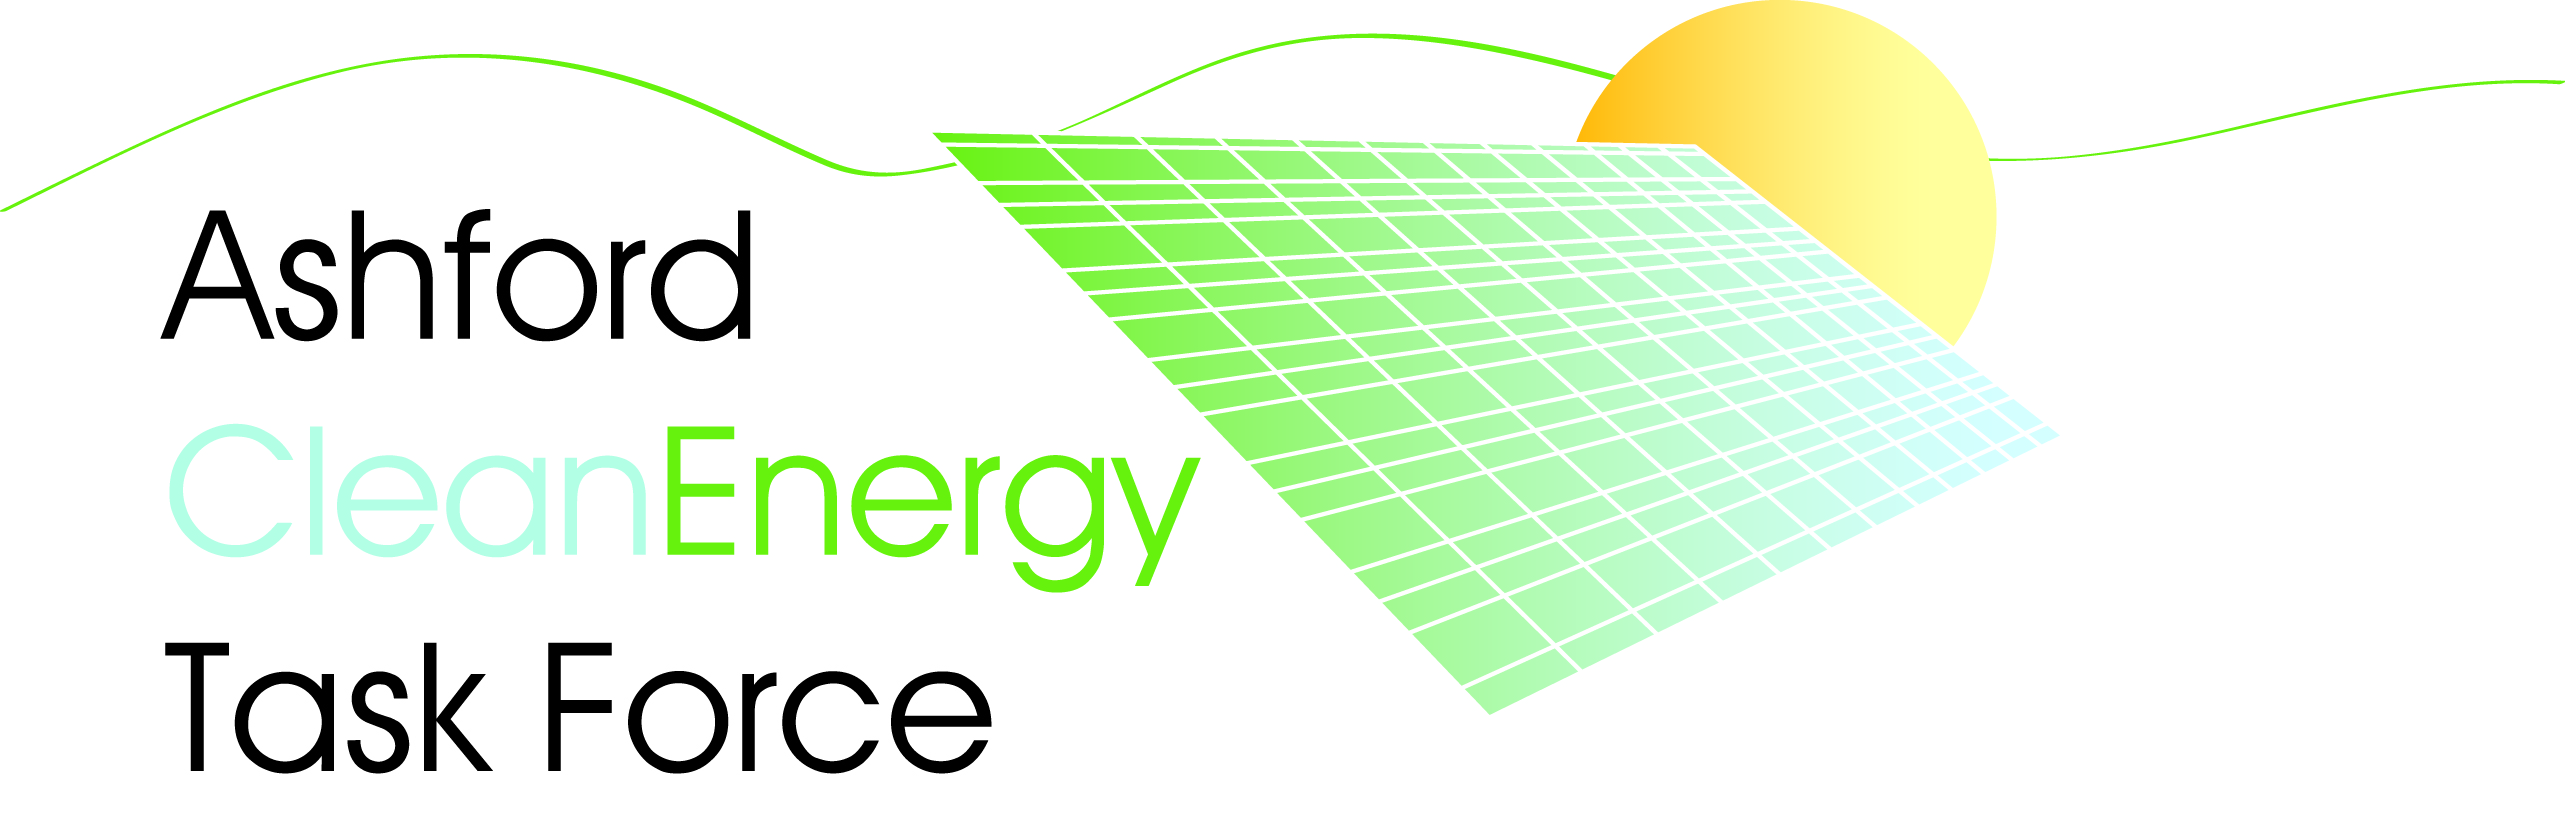 Ashford clean energy logo